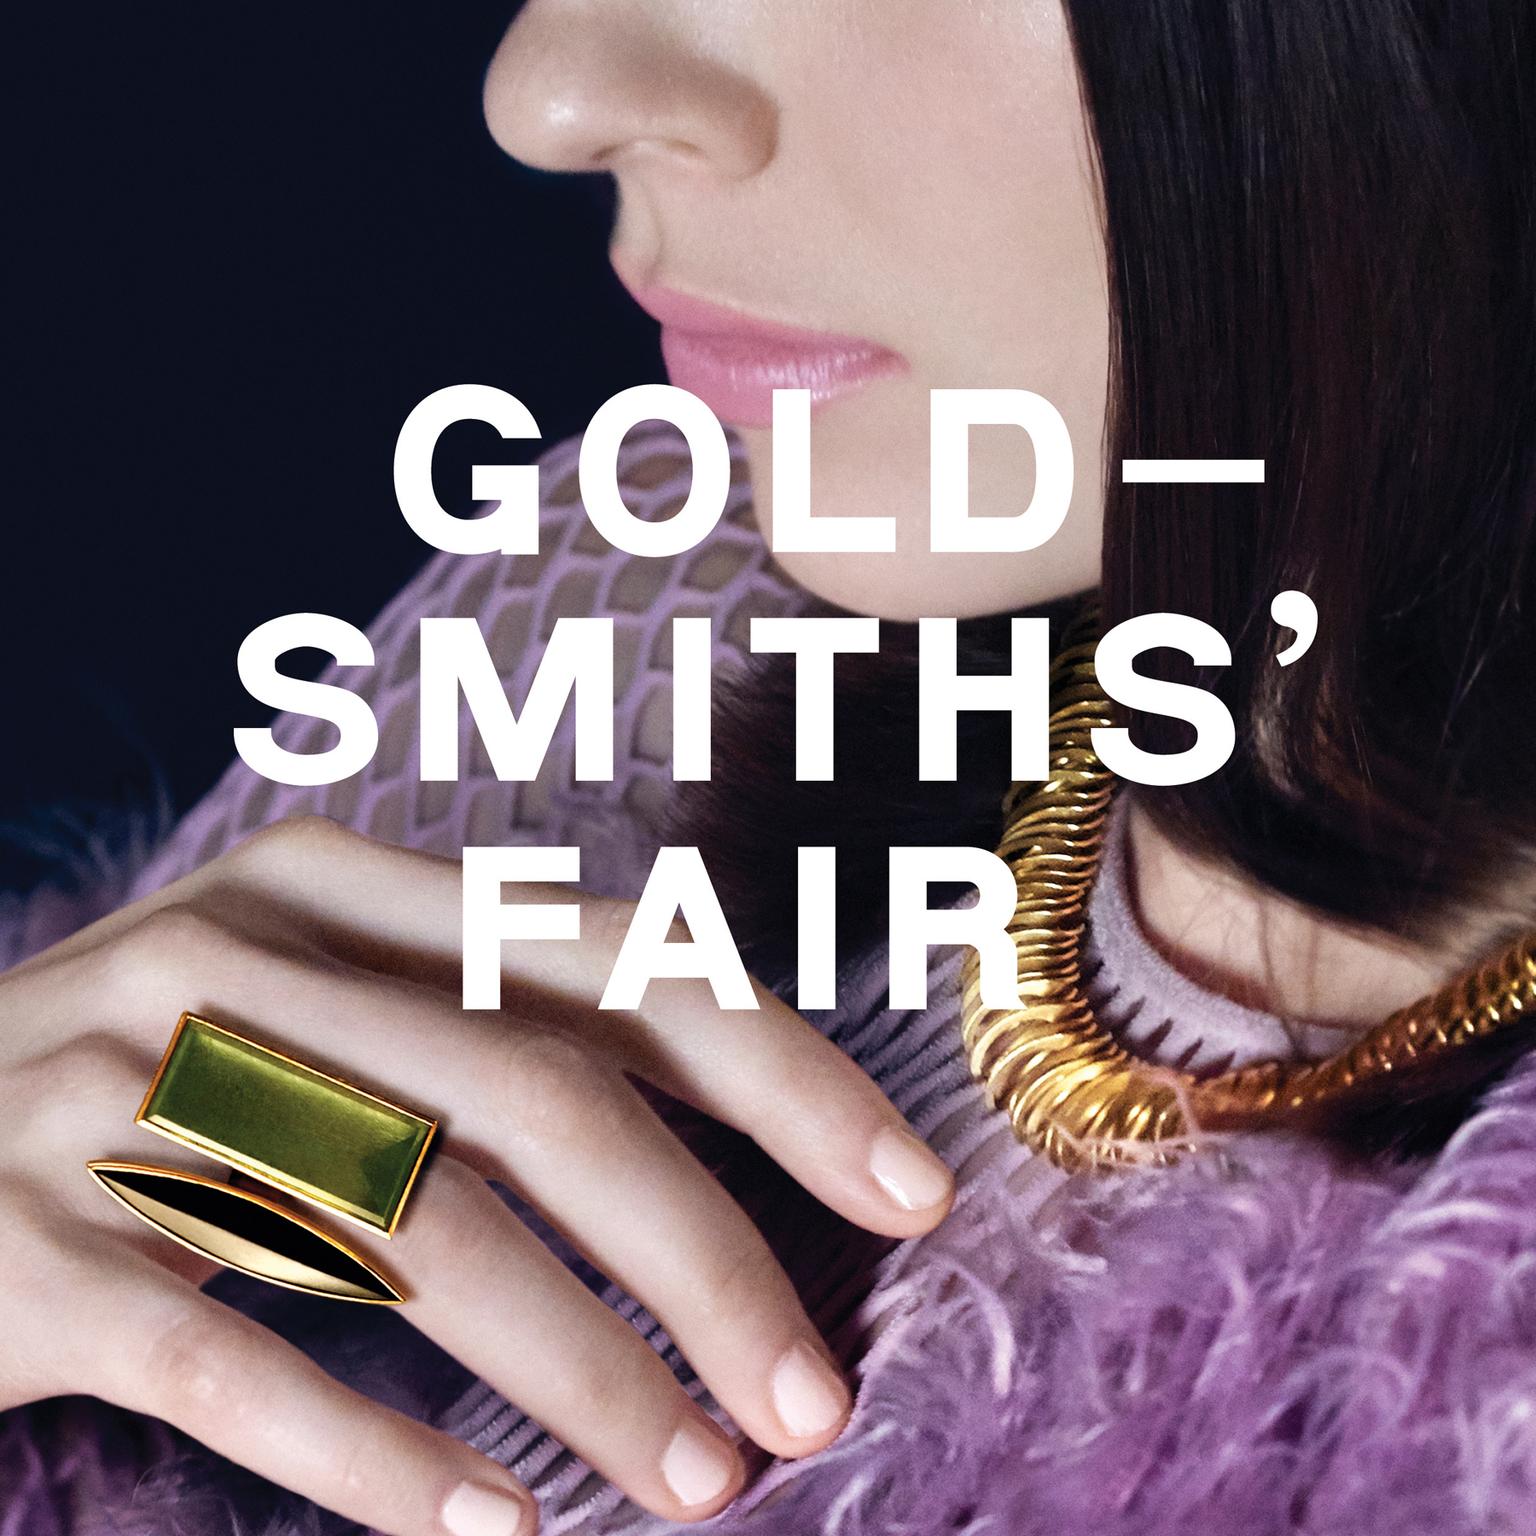 Goldsmiths’ Fair